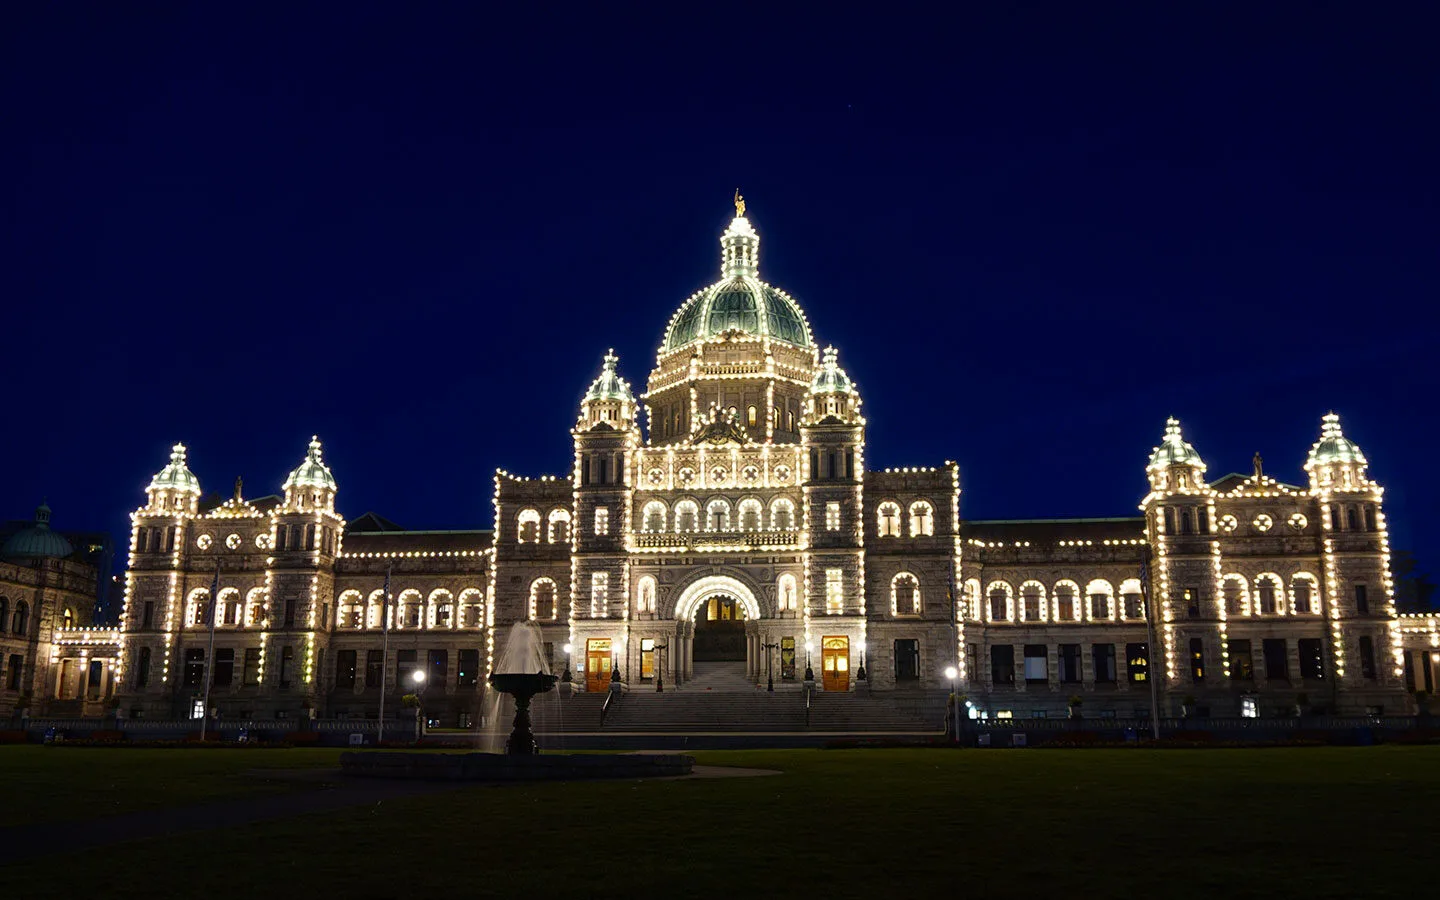 The BC Legislative Assembly building at night